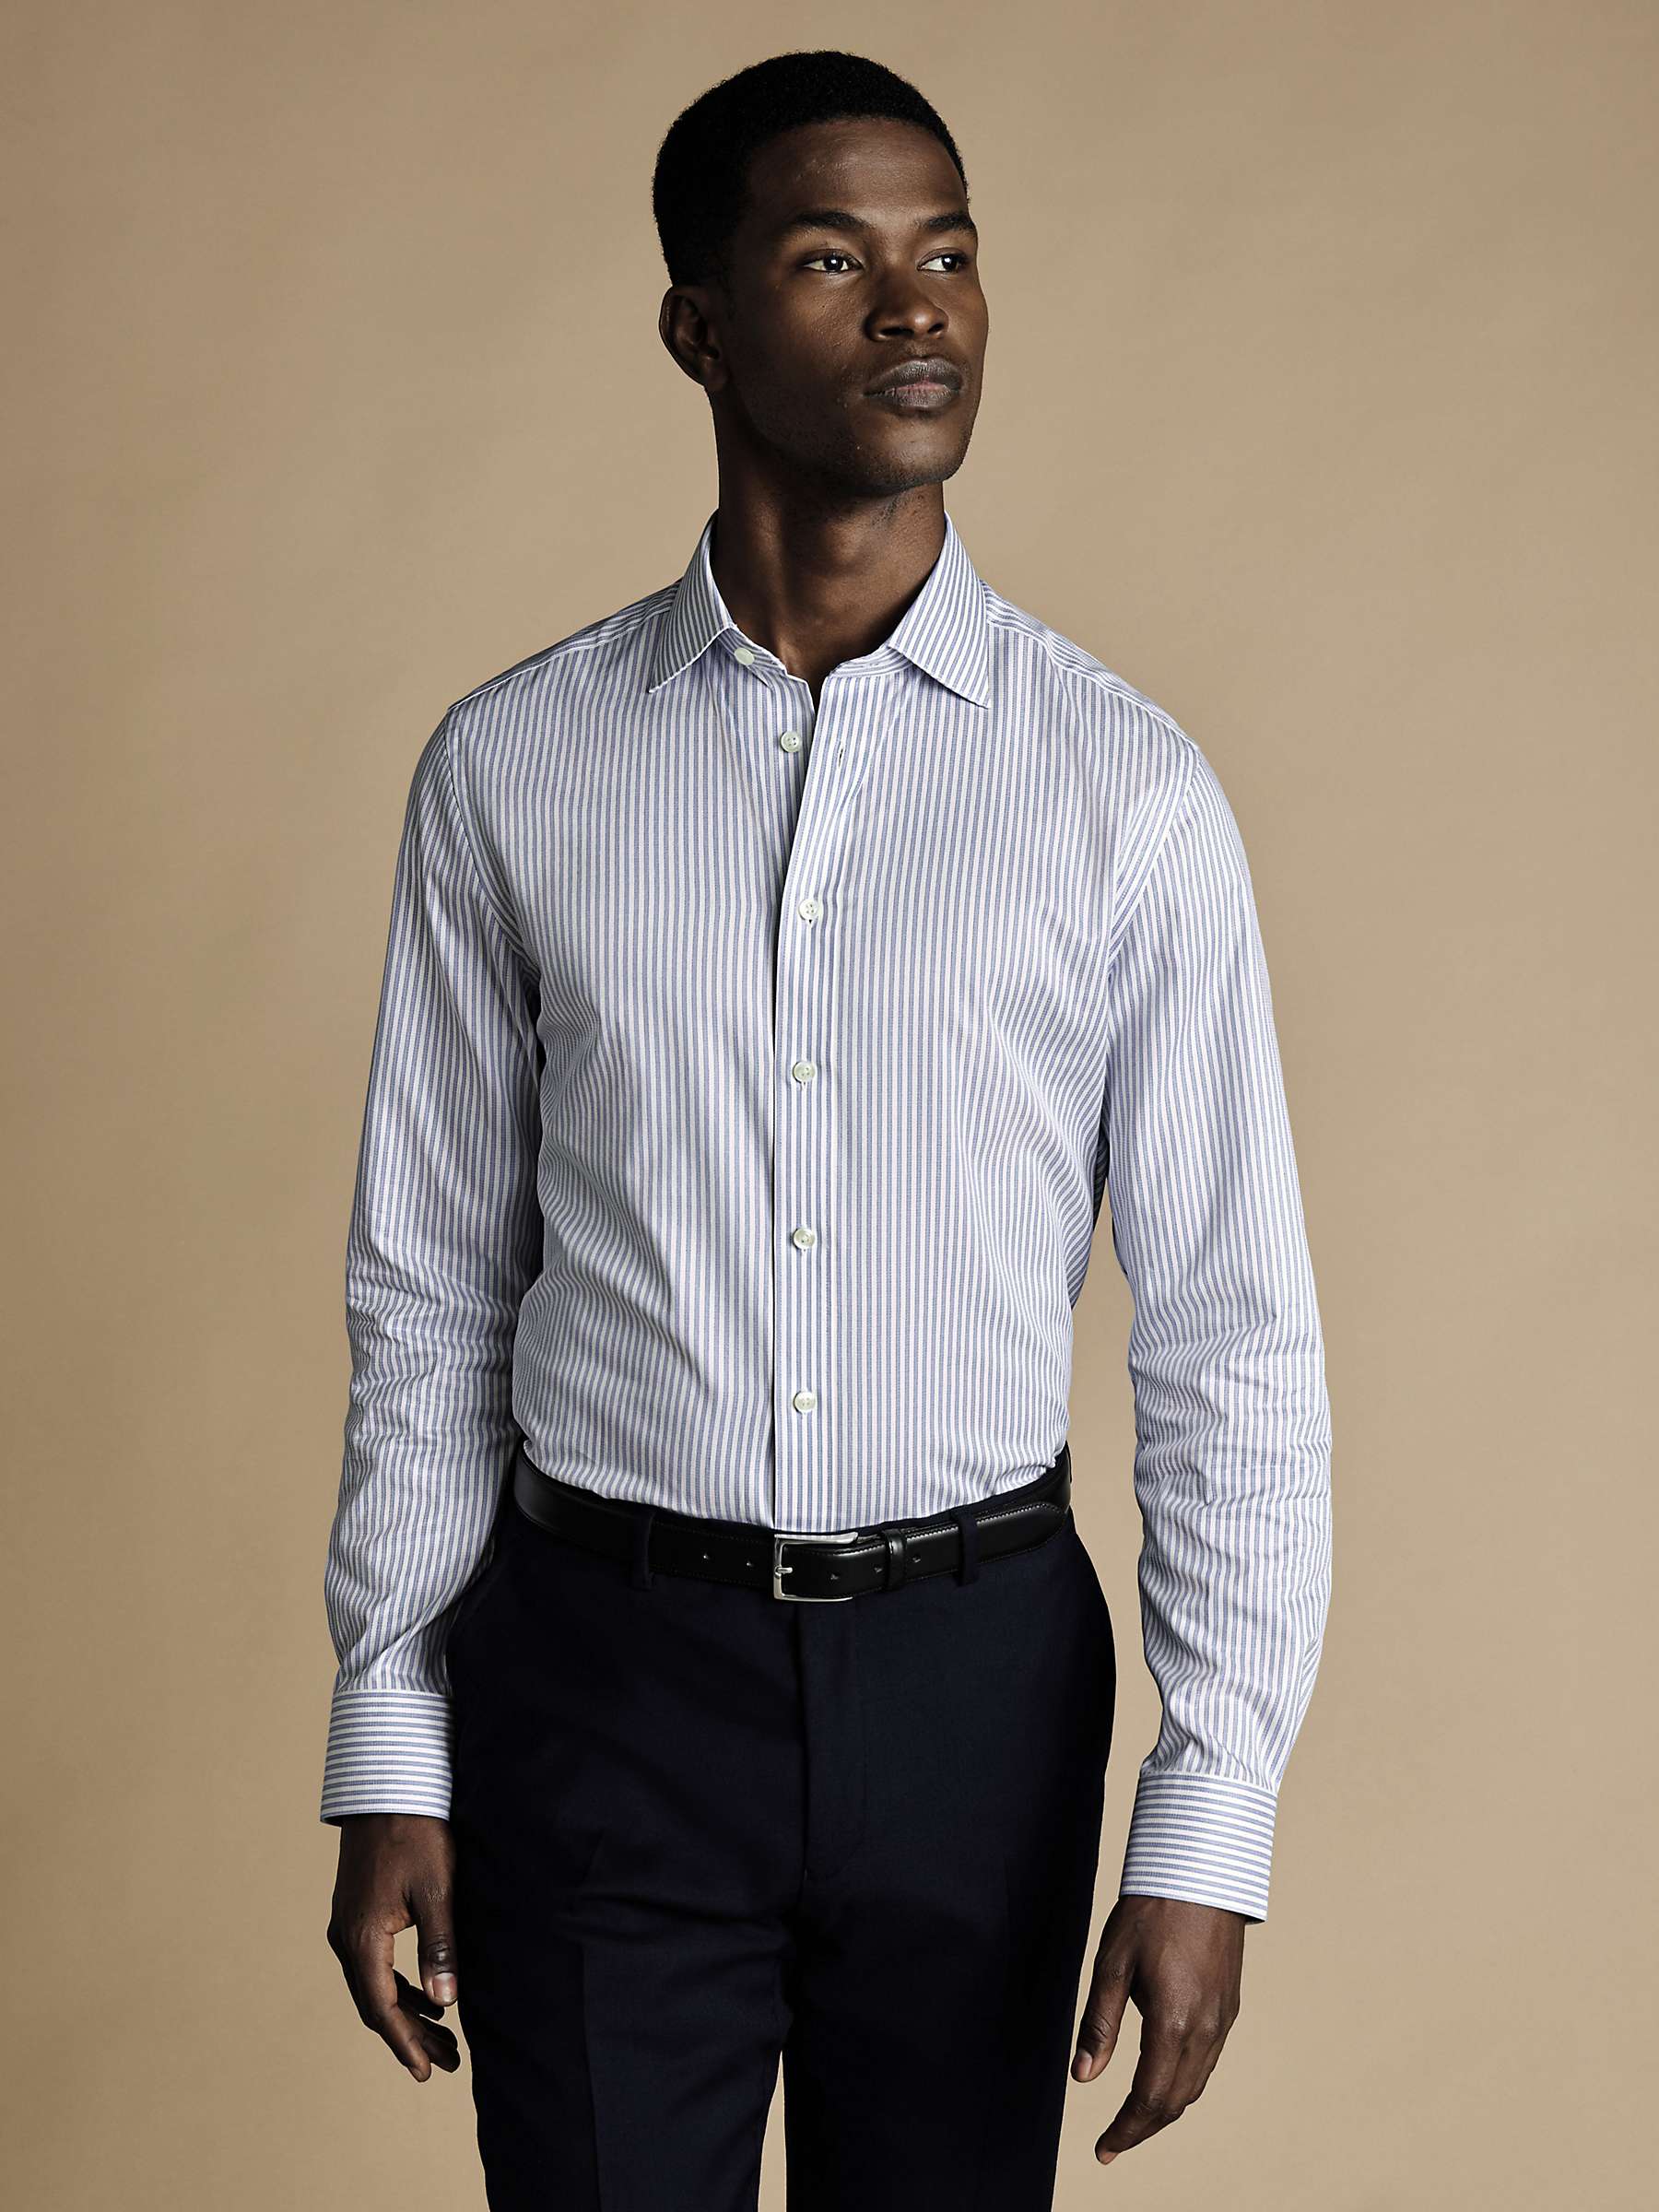 Buy Charles Tyrwhitt Stripe Cotton Twill Shirt, Sky Blue Online at johnlewis.com